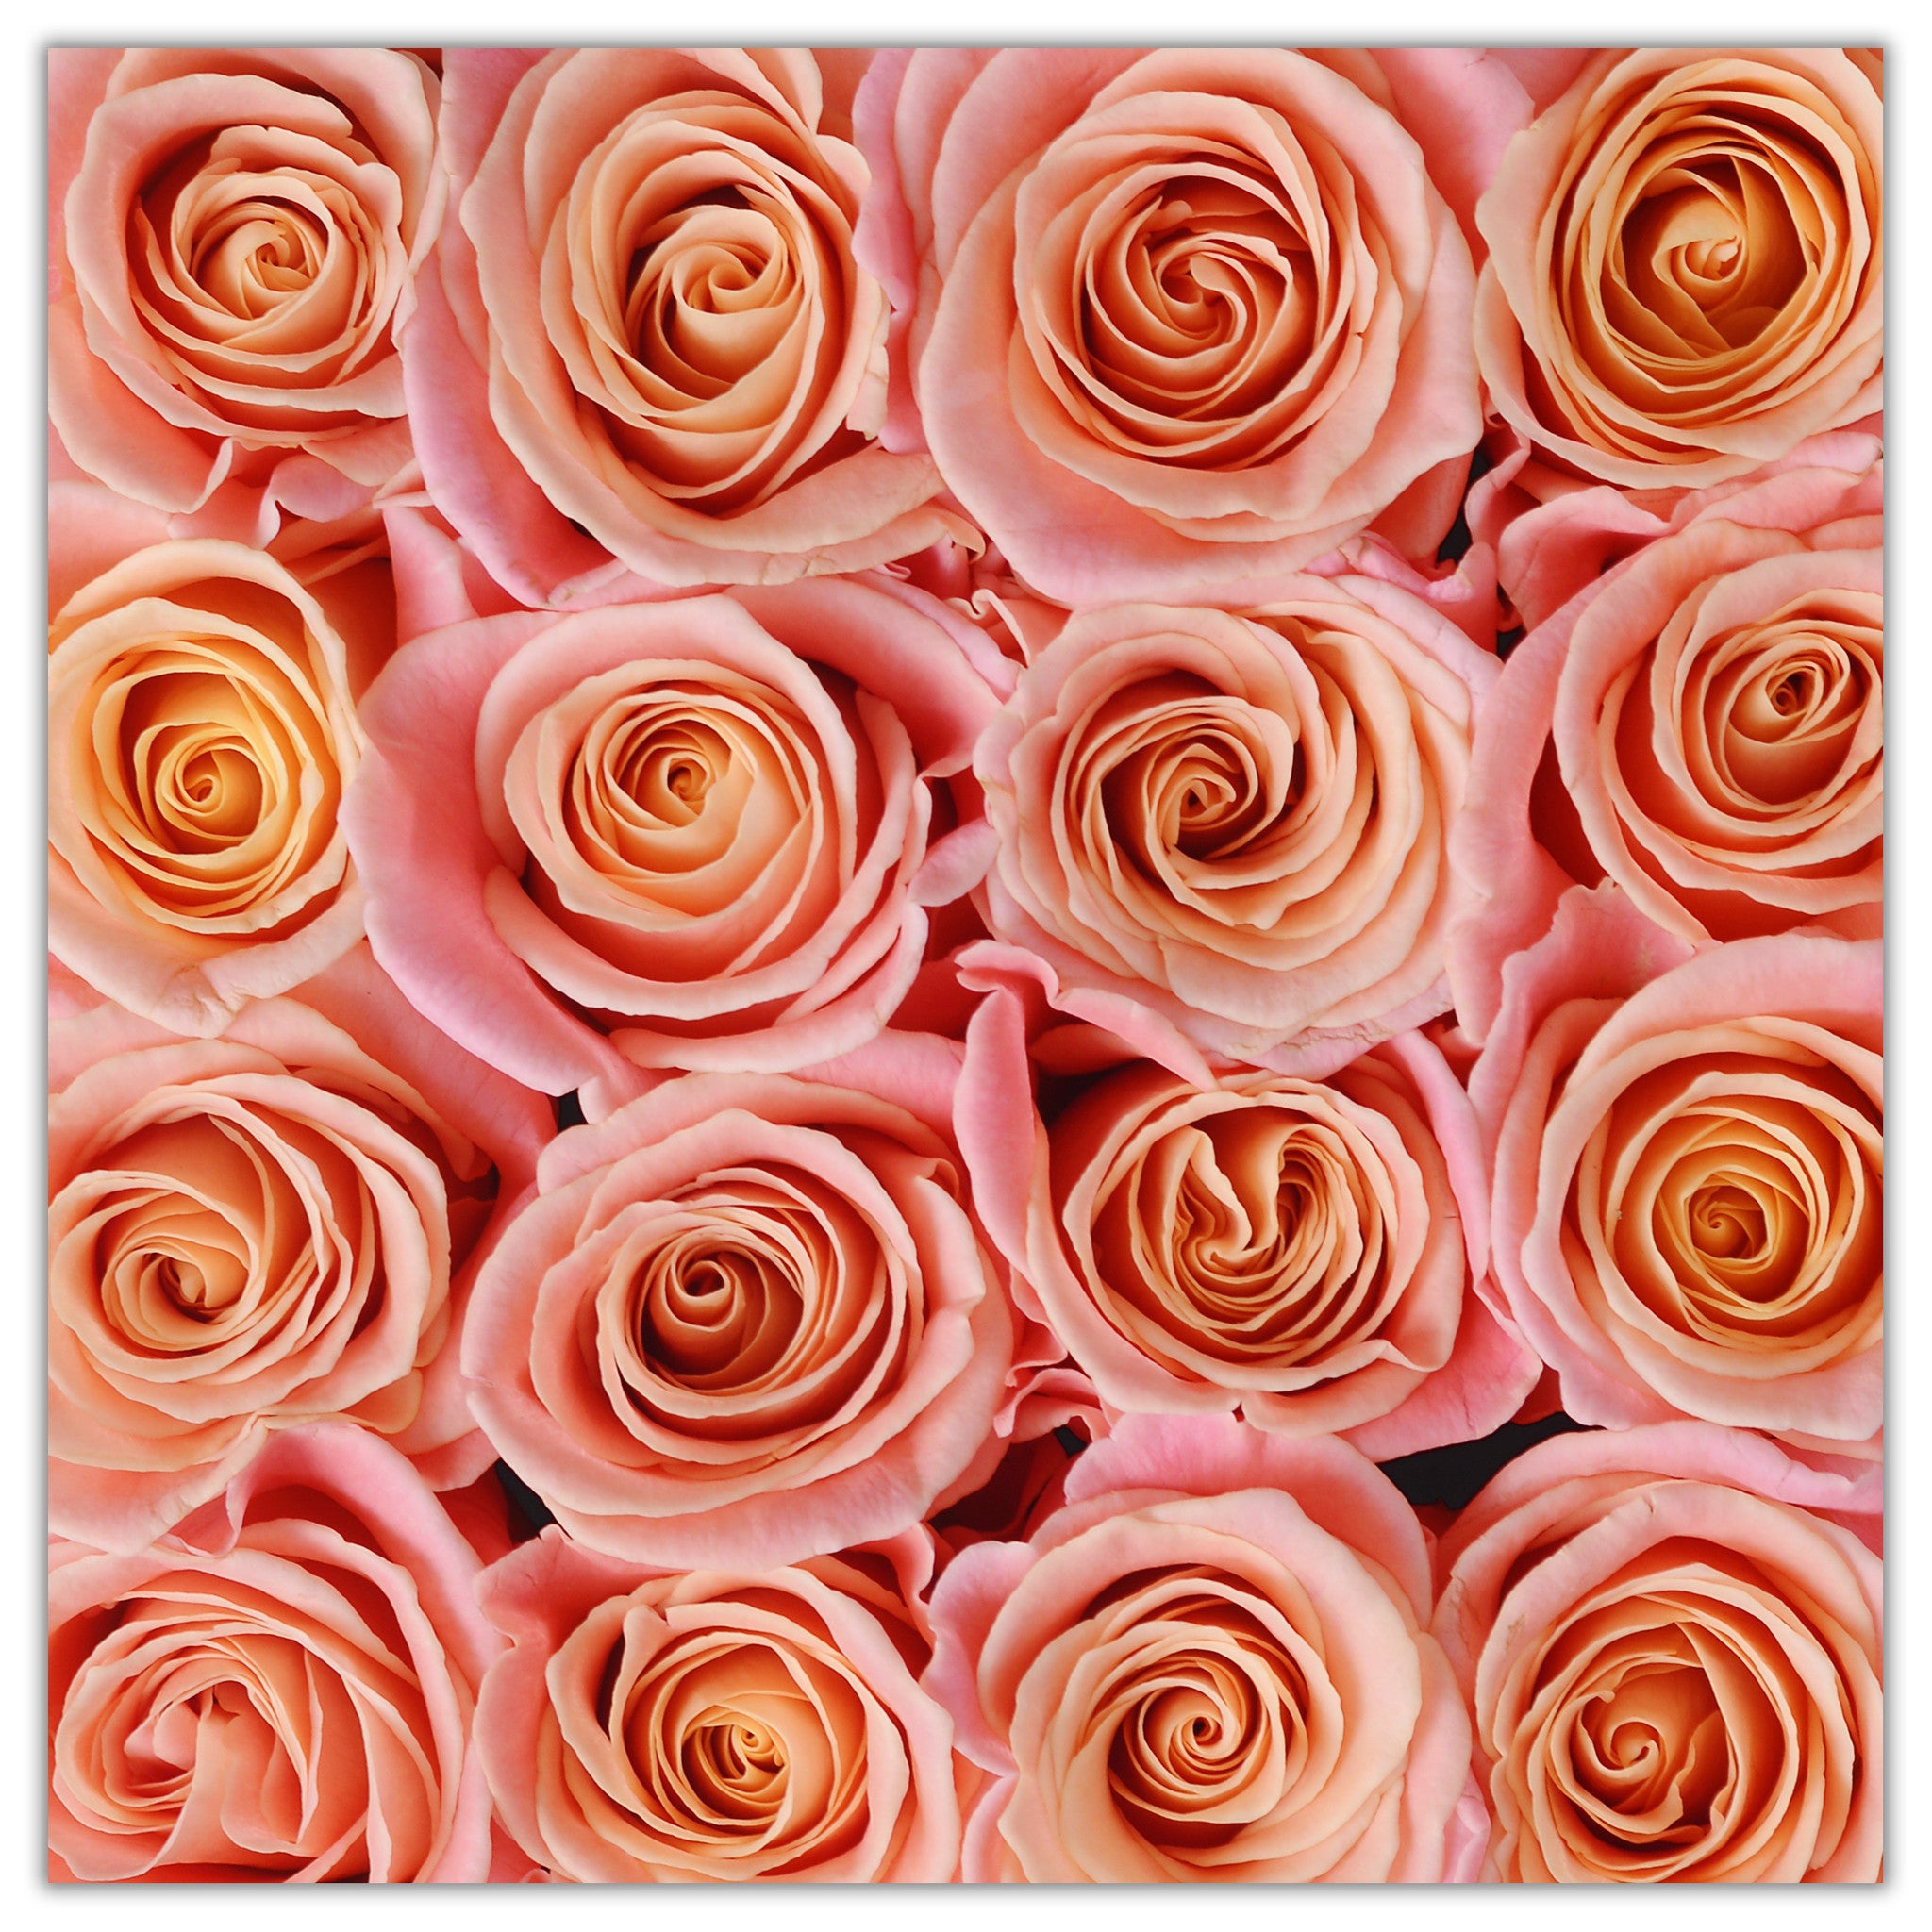 Cube - Peach Roses - White Box - The Million Roses Budapest